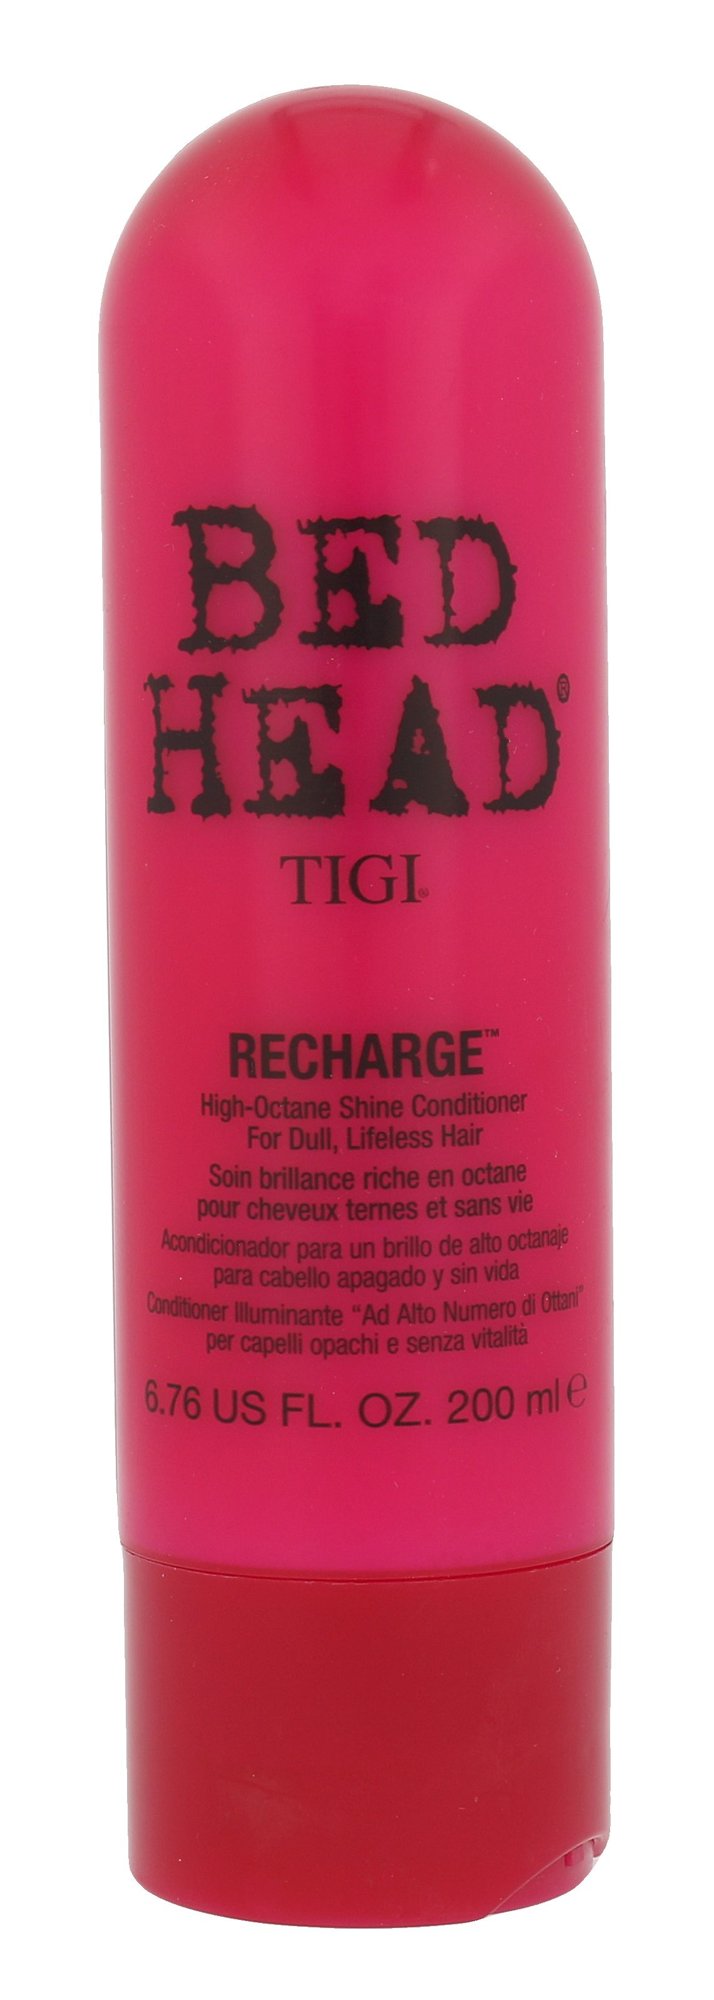 Tigi Bed Head Recharge 200ml kondicionierius